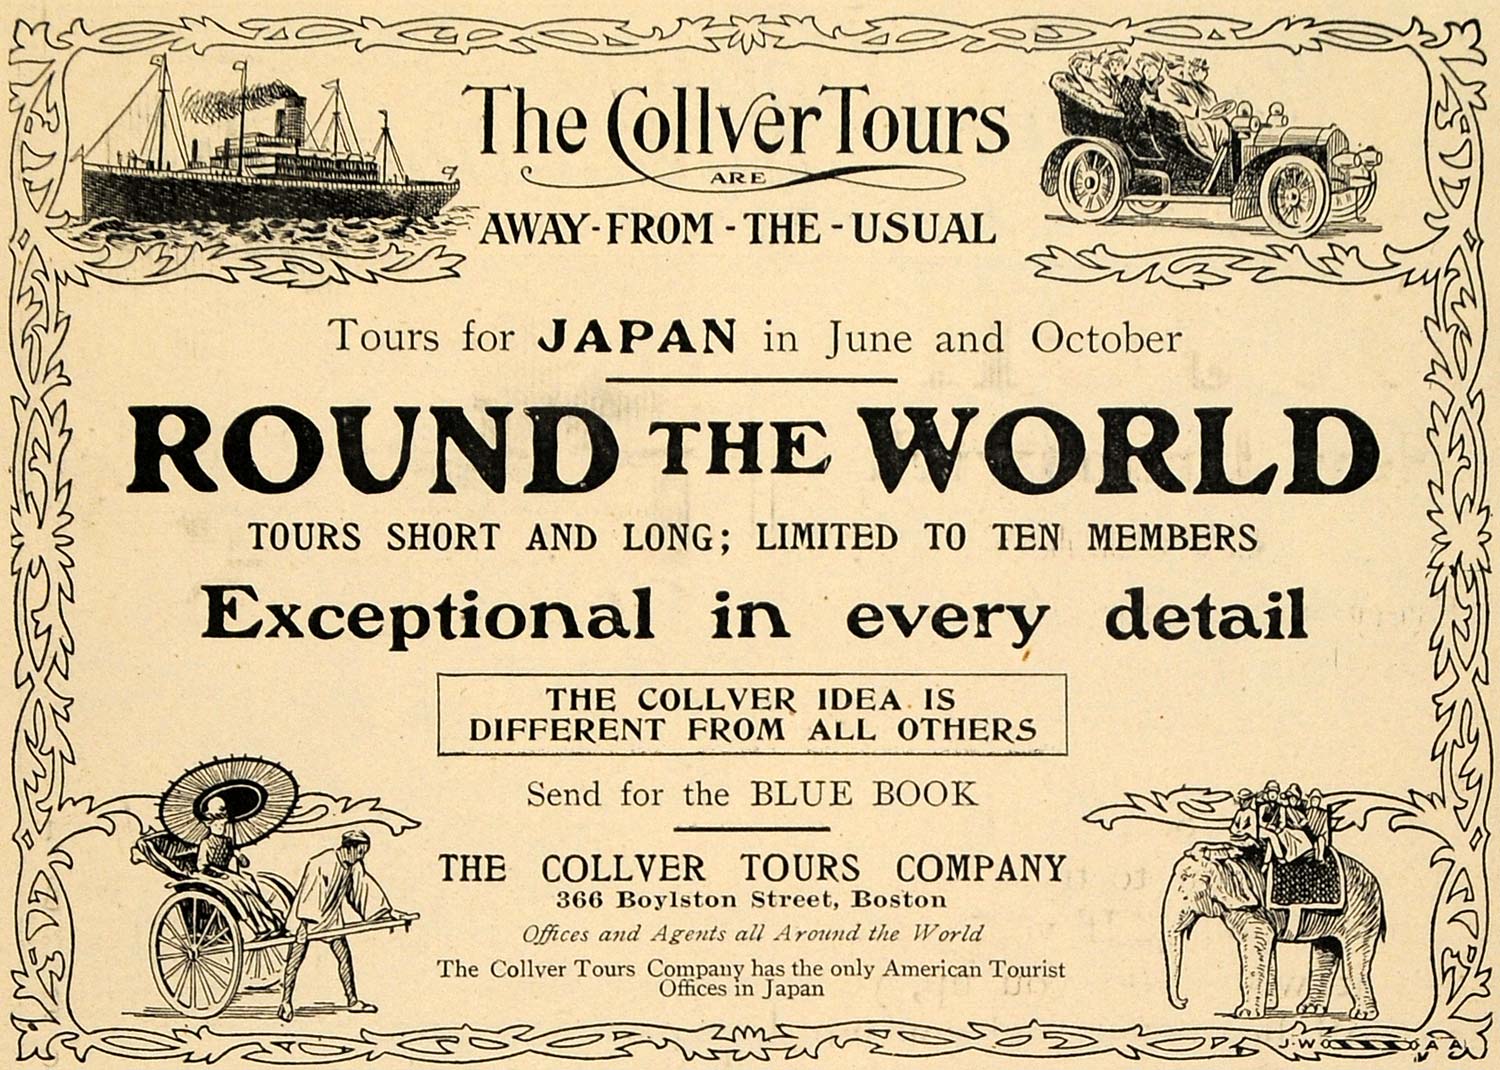 1907 Ad Collver Tours Japan Round World Traveling Away - ORIGINAL TOM1